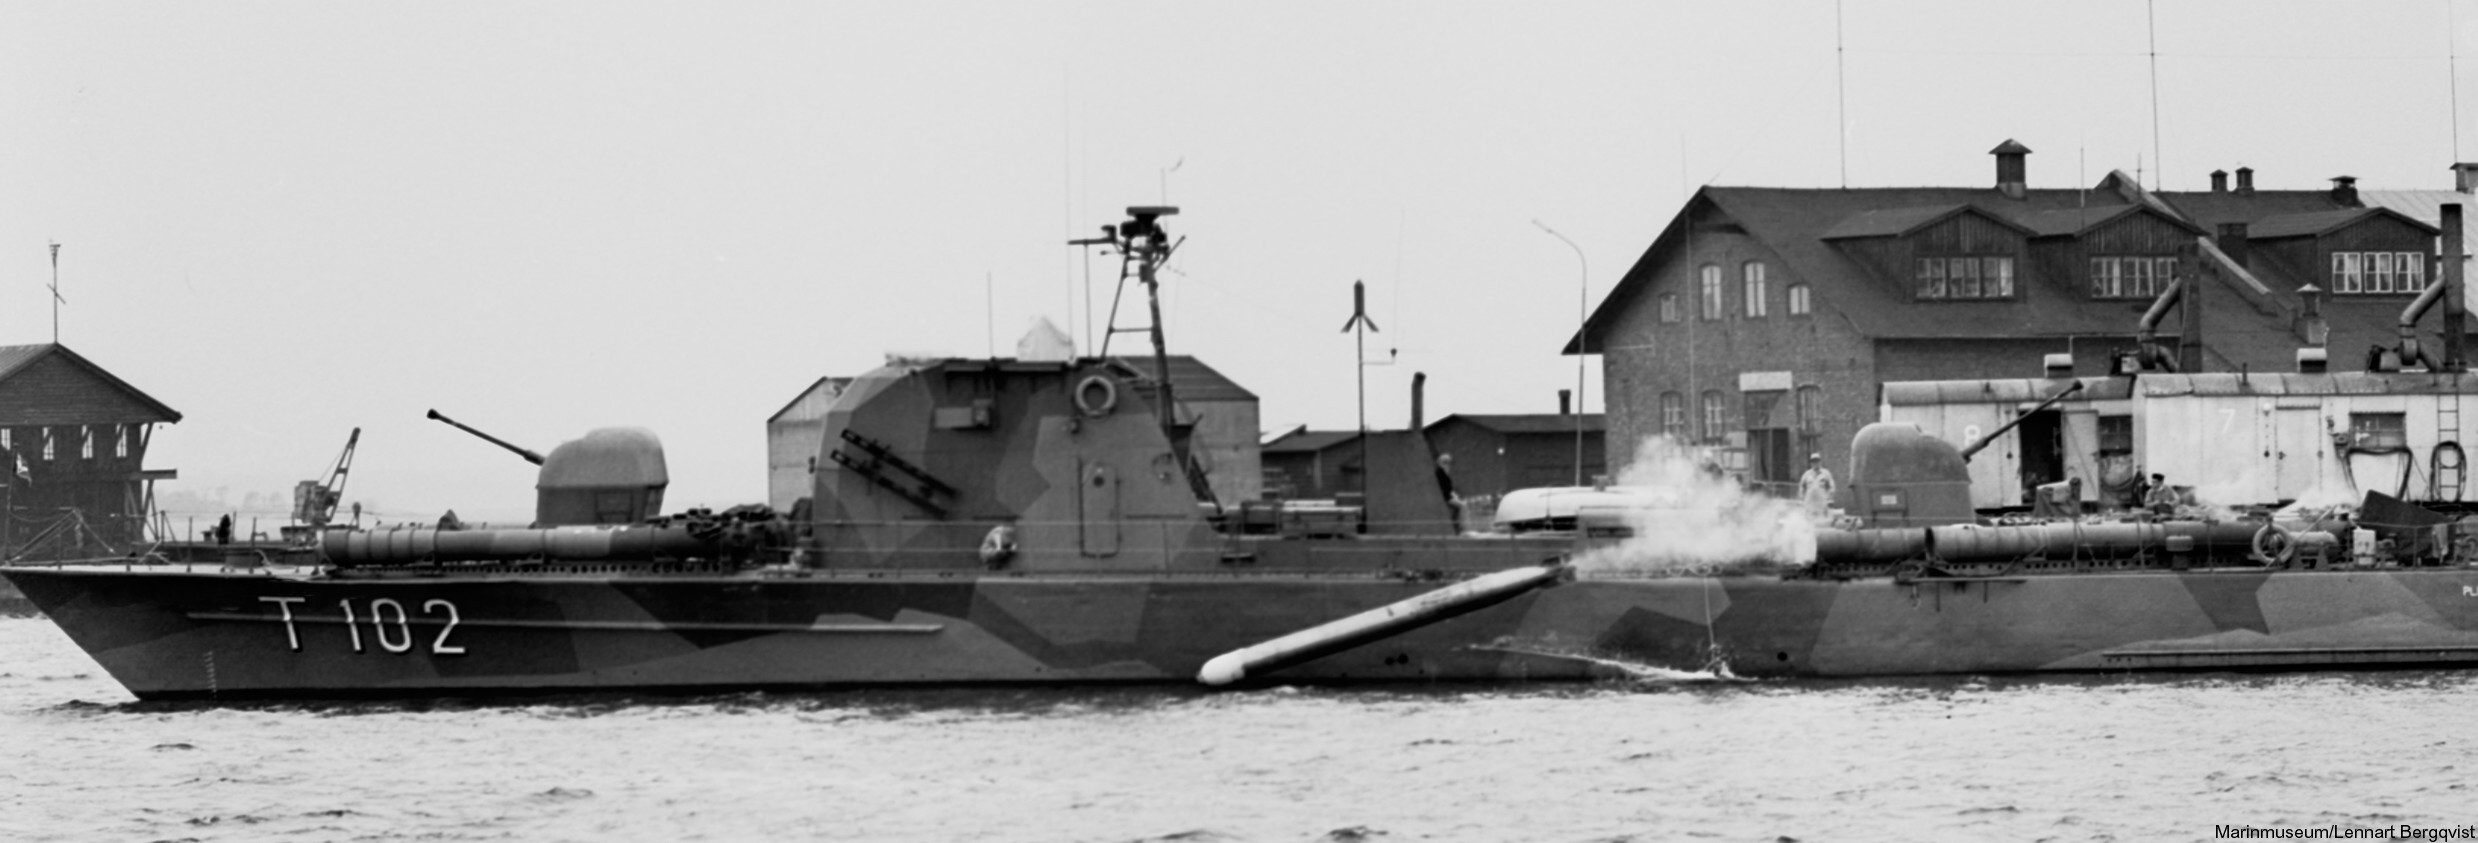 t102 plejad hms hswms class fast attack craft torpedo boat vessel swedish navy svenska marinen 03